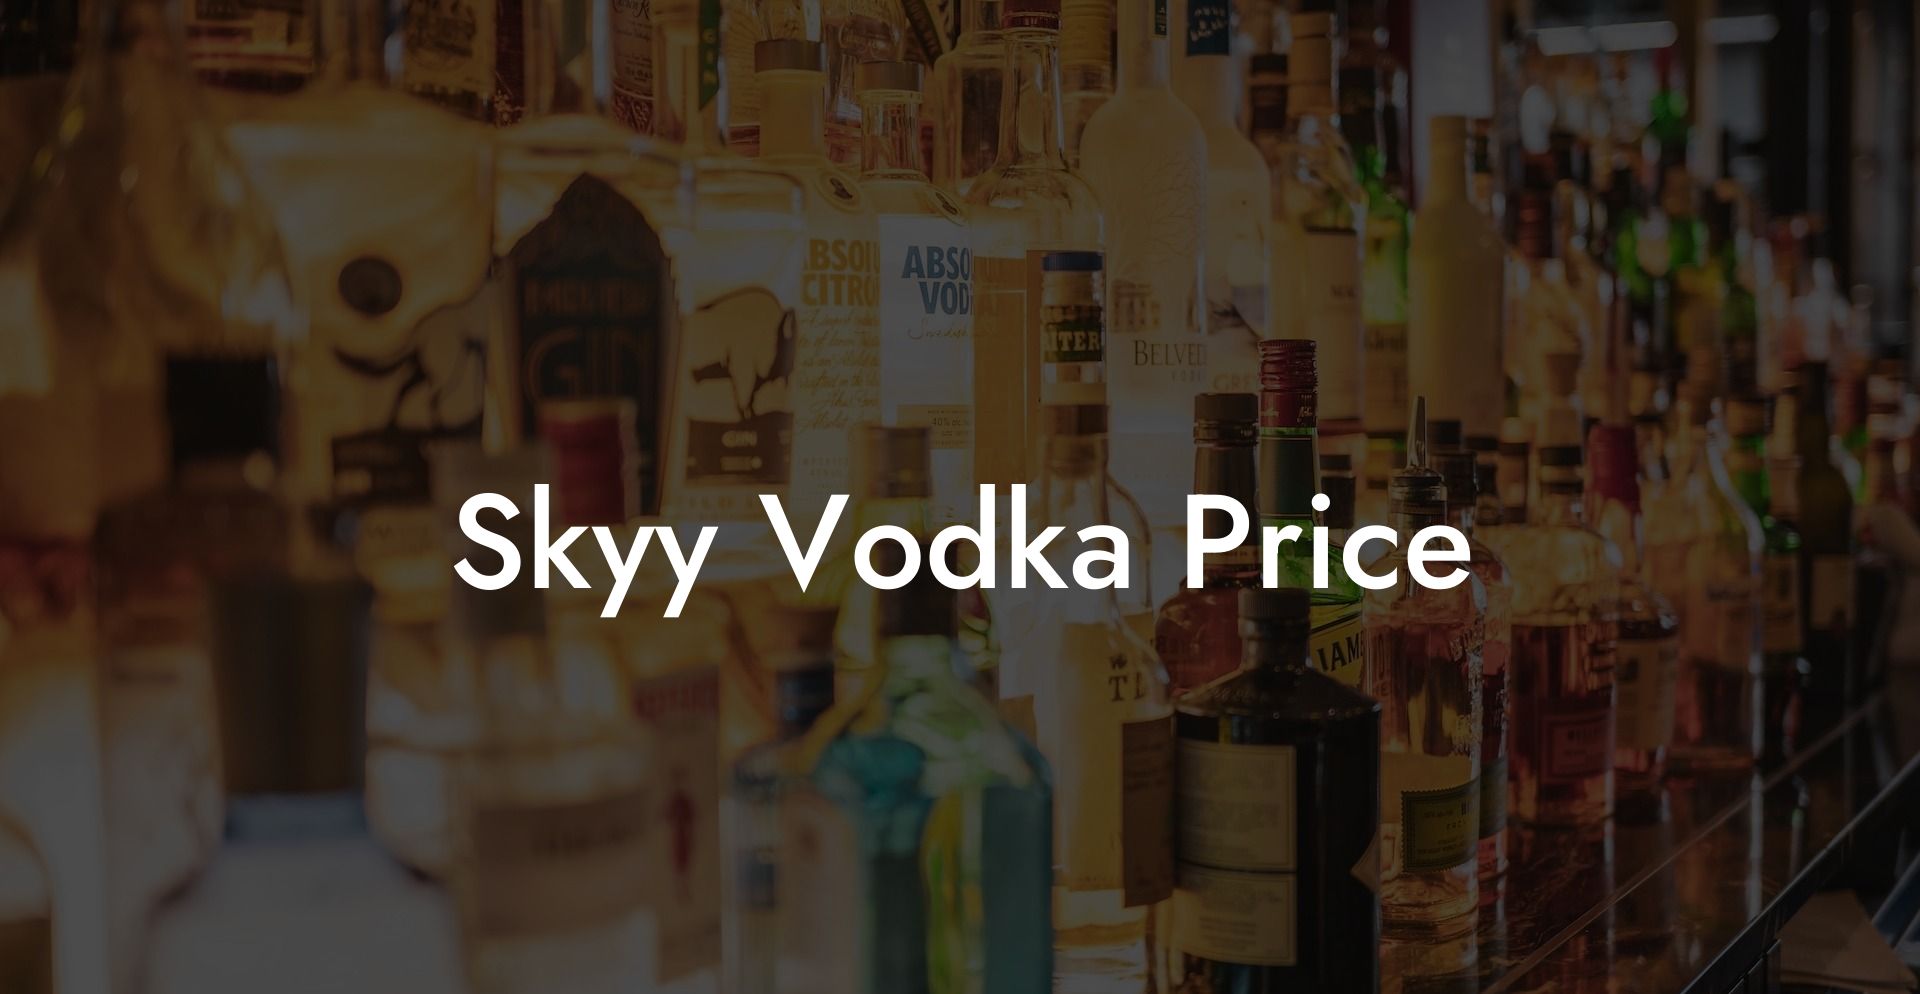 Skyy Vodka Price